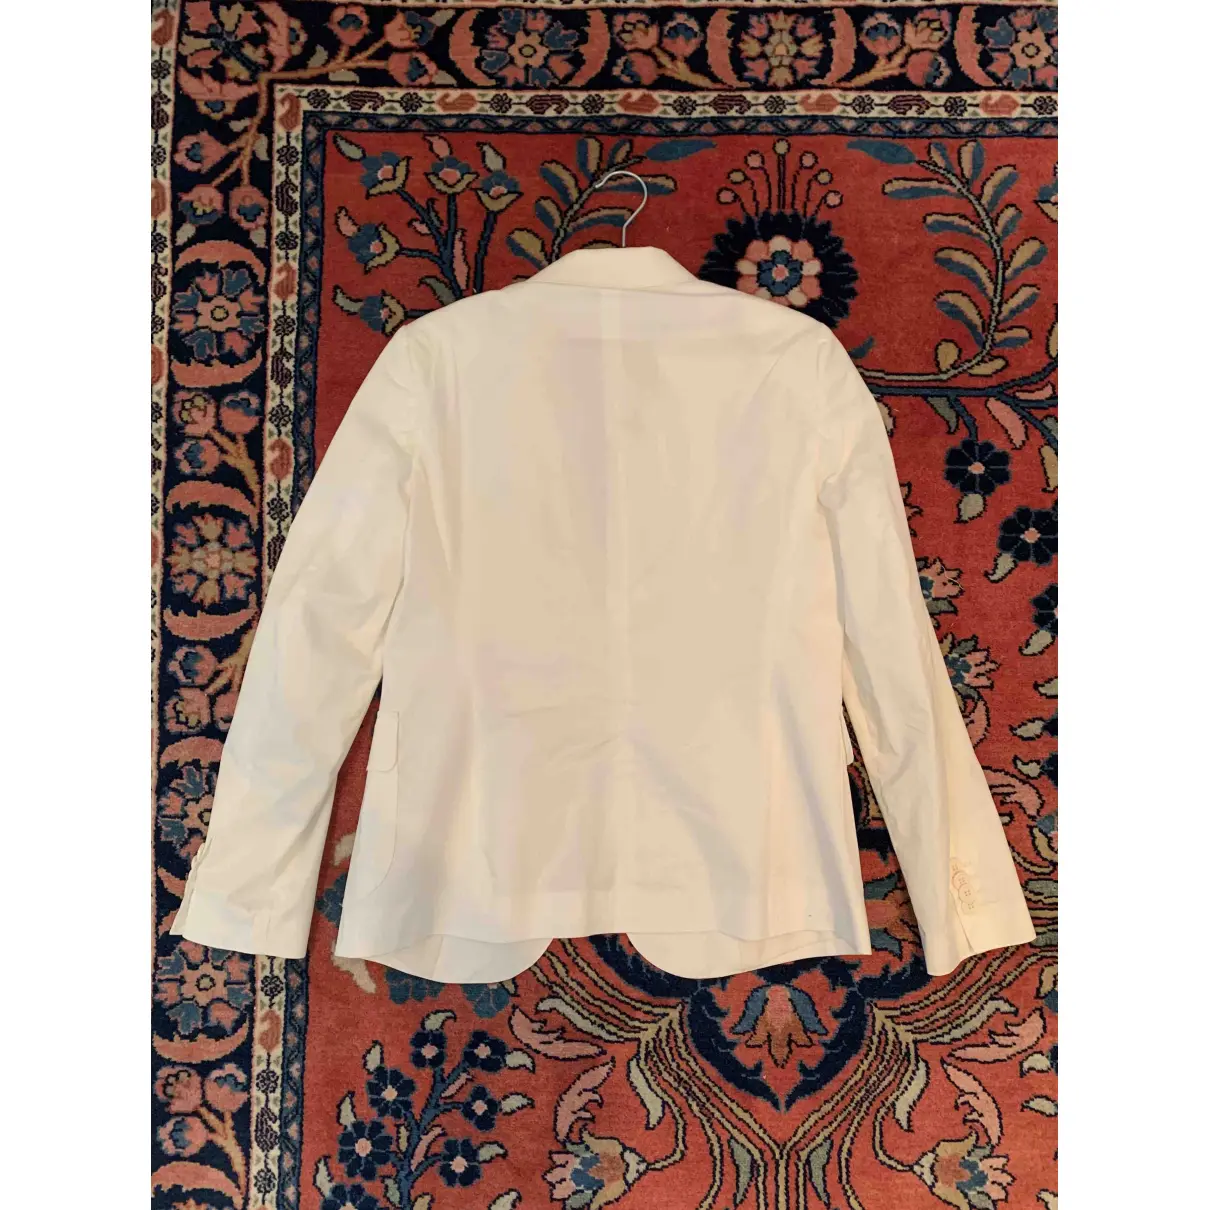 Buy Moschino Love White Cotton Jacket online